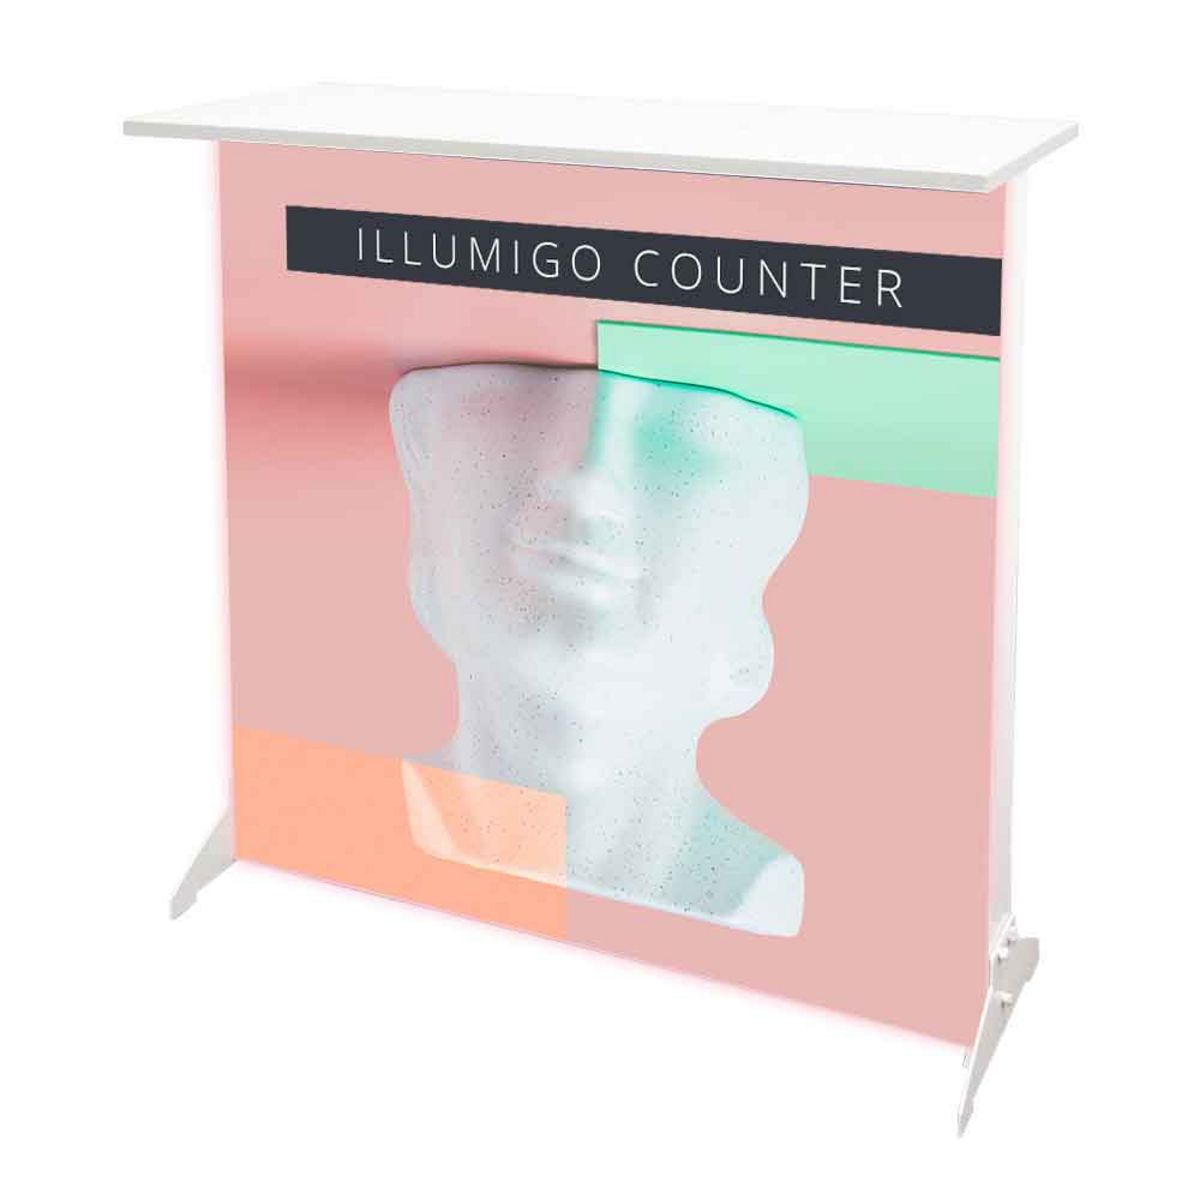 illumigo-counter-2-main-77403.jpg